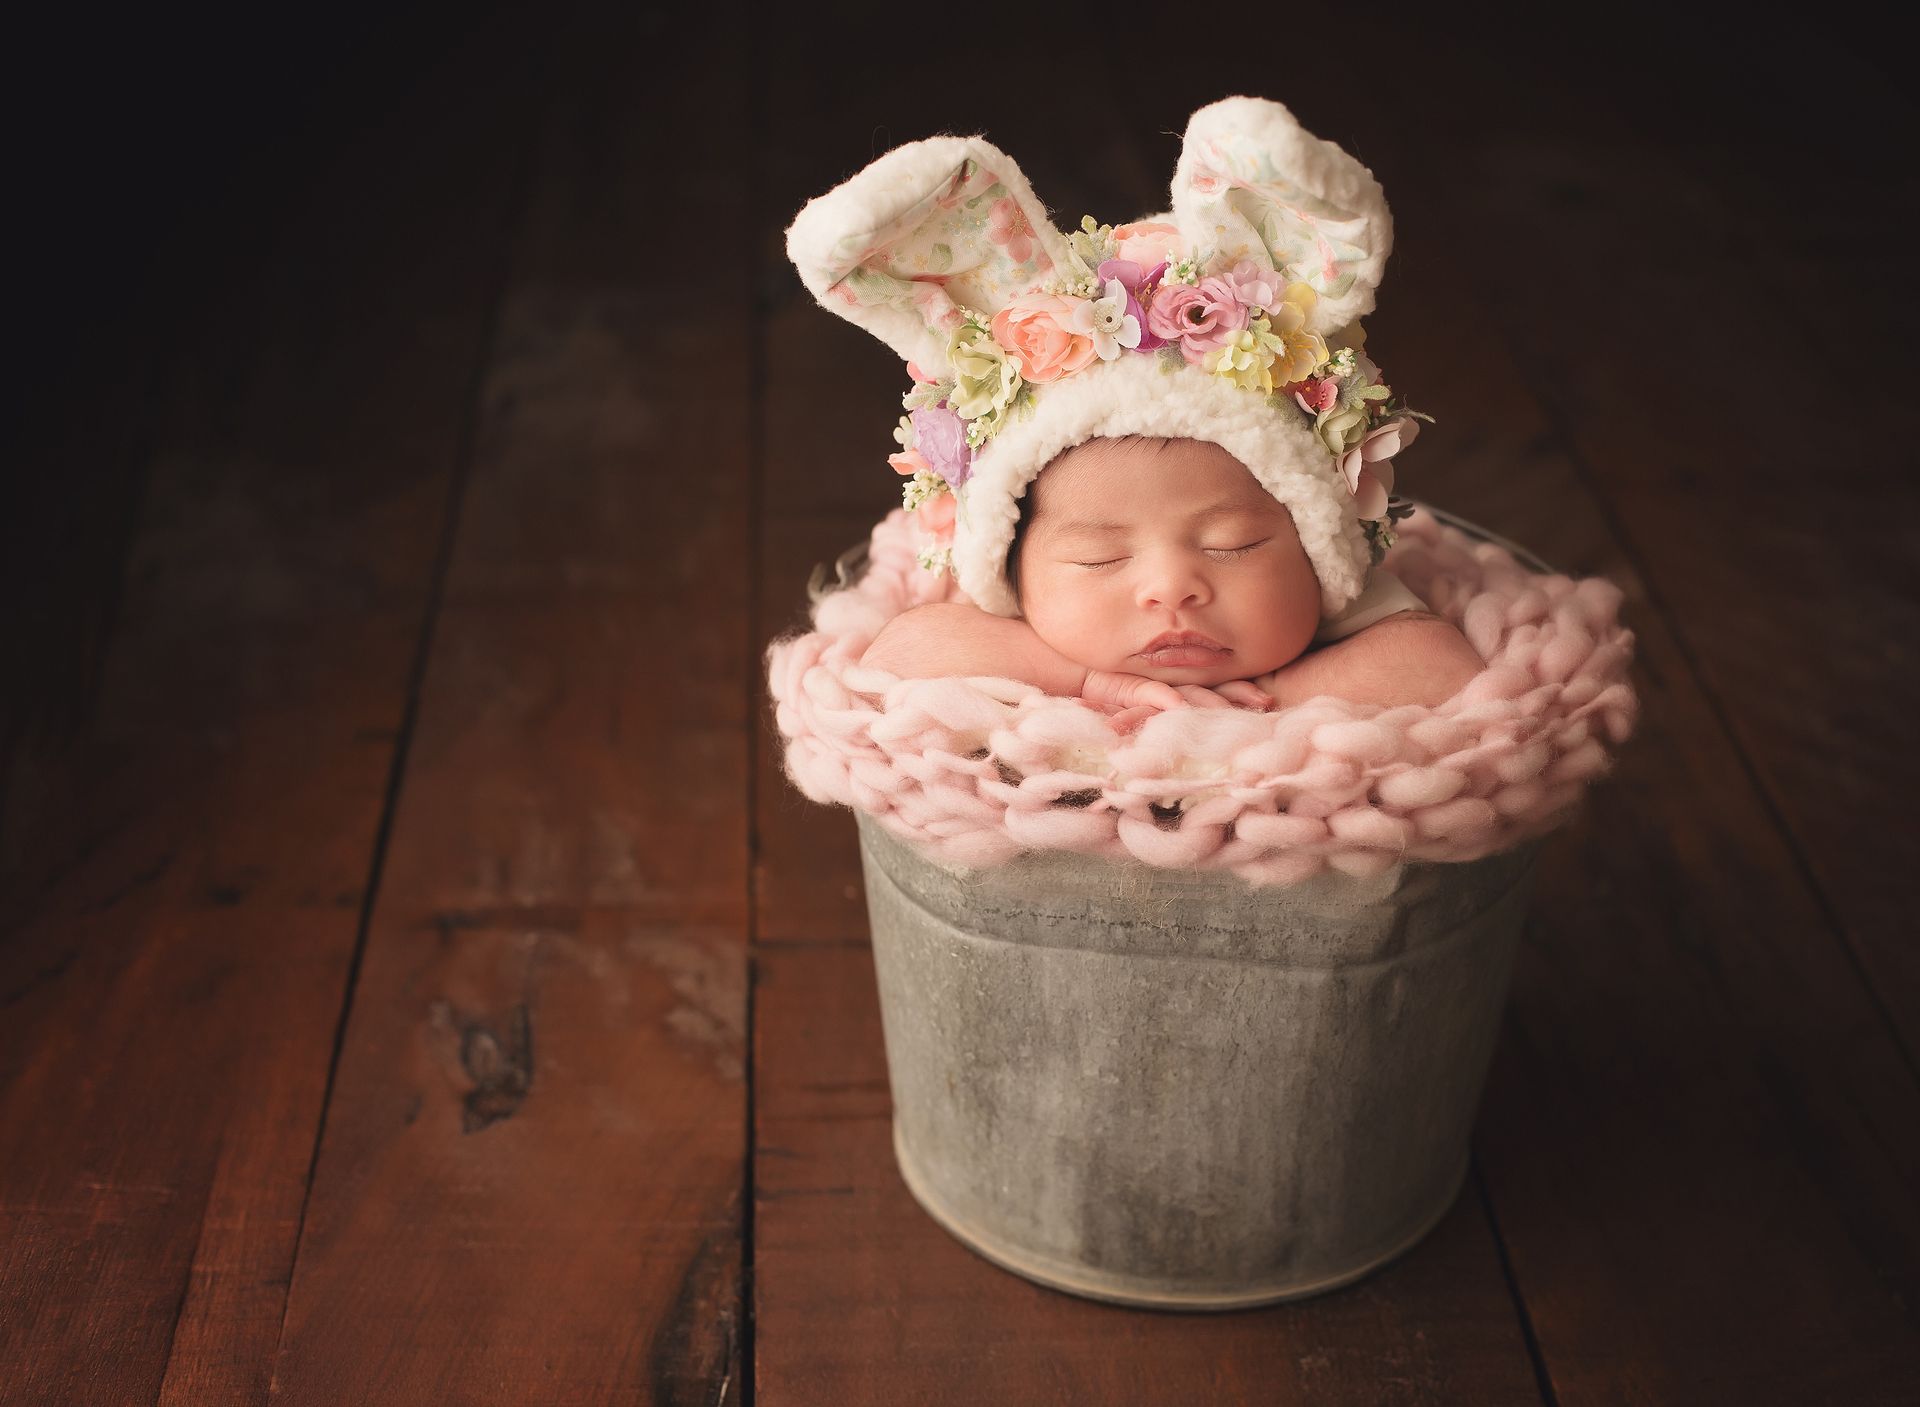 A newborn baby wearing a bunny hat is sleeping in a bucket.